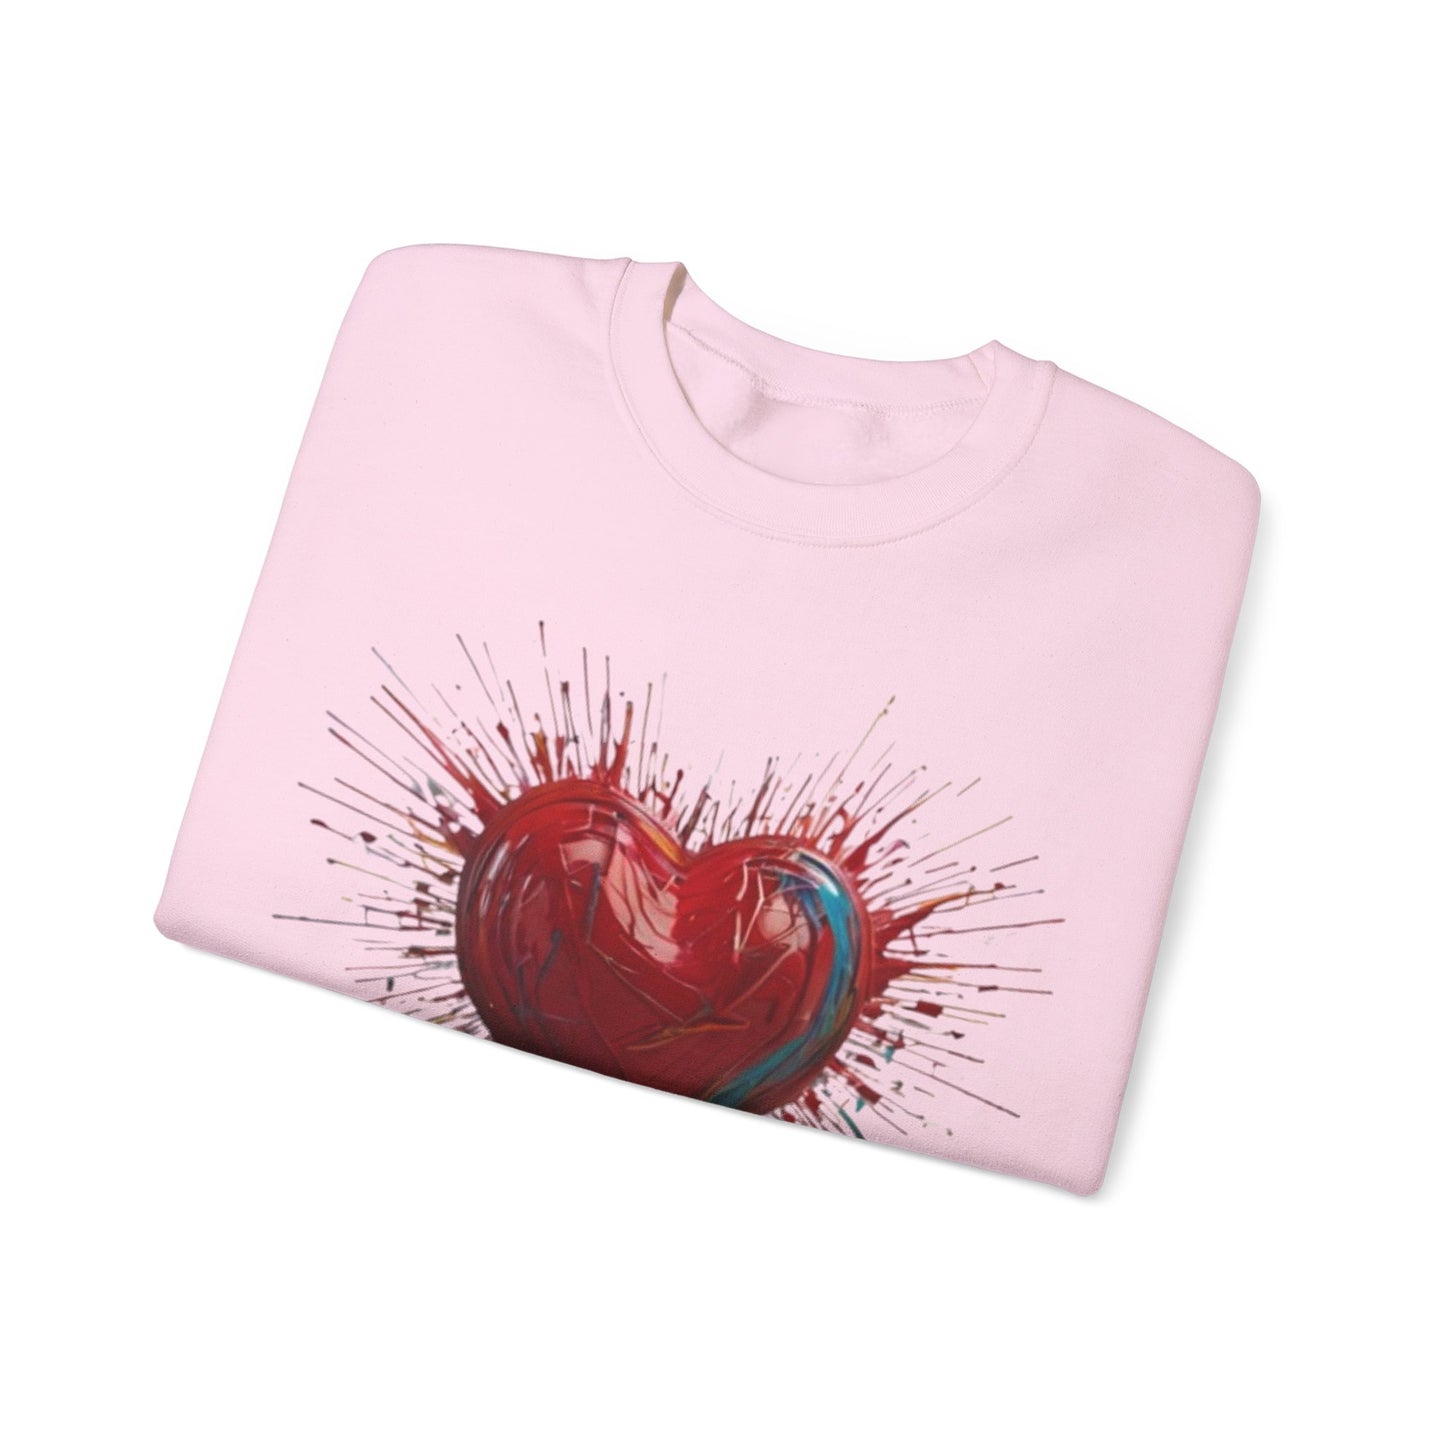 Messy Red Exploding Love Heart - Unisex Crewneck Sweatshirt